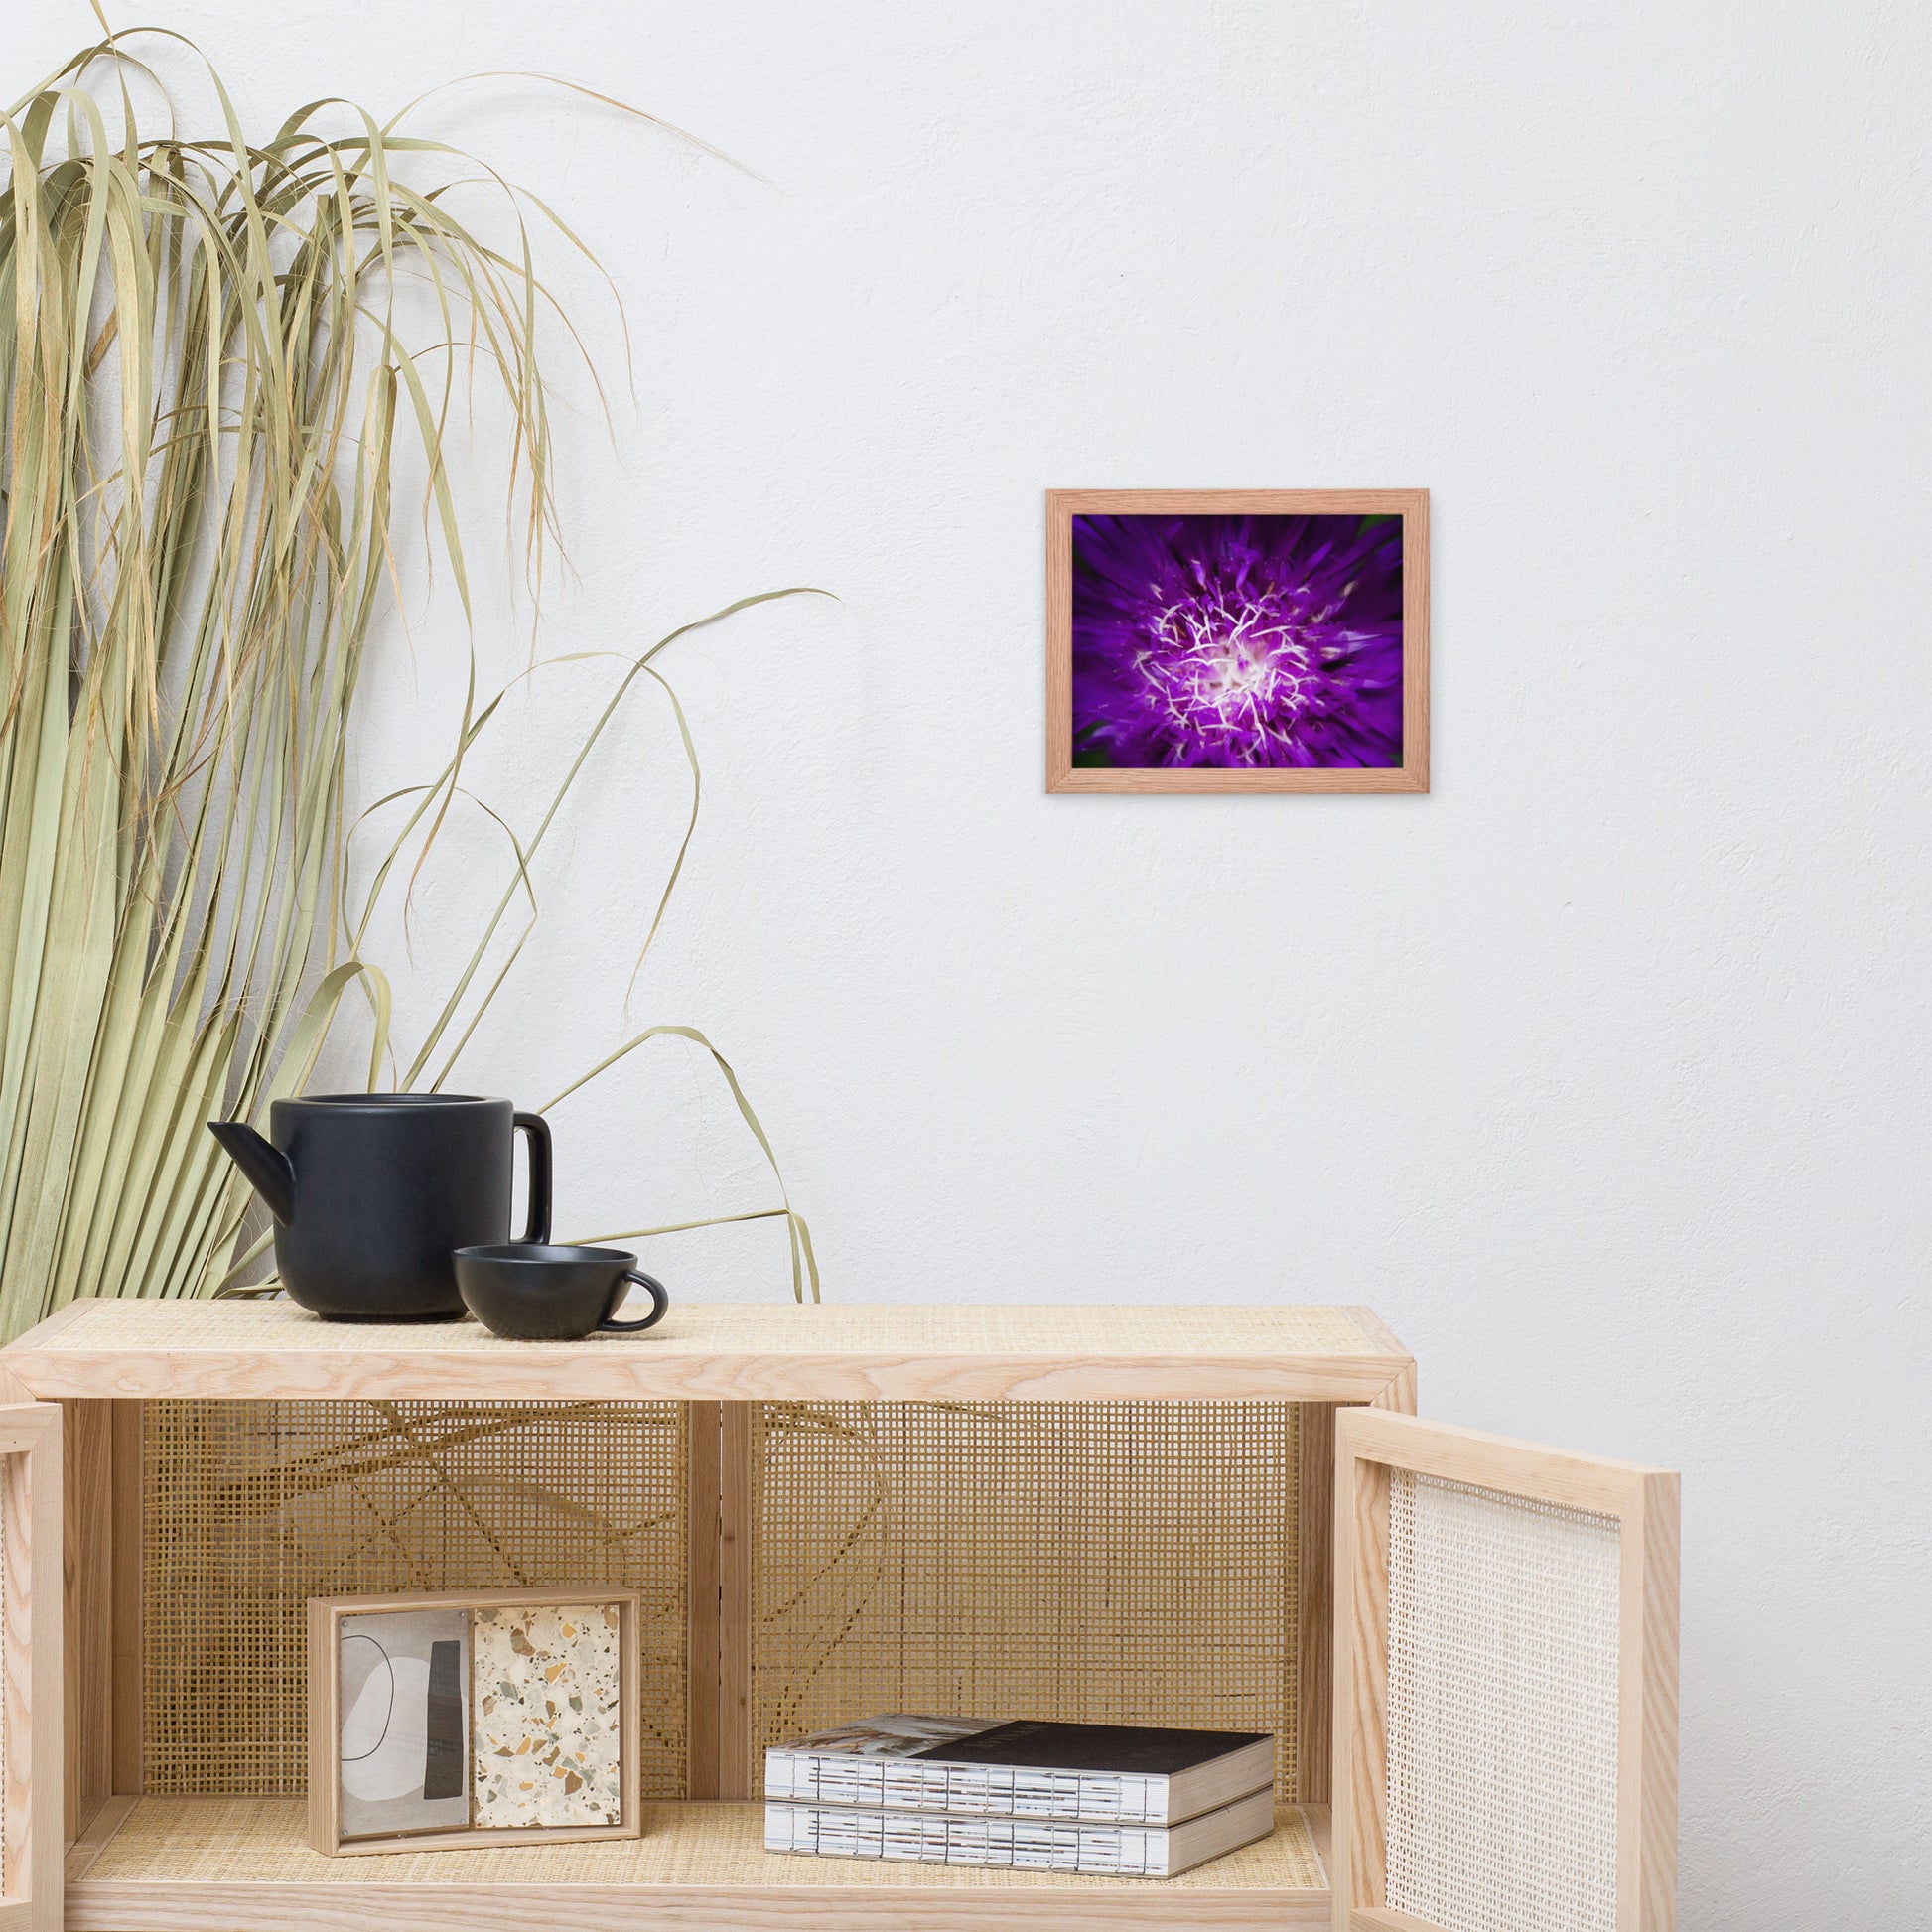 Modern Art Frames For Living Room: Purple Abstract Flower - Botanical / Floral / Flora / Flowers / Nature Photograph Framed Wall Art Print - Artwork - Wall Decor